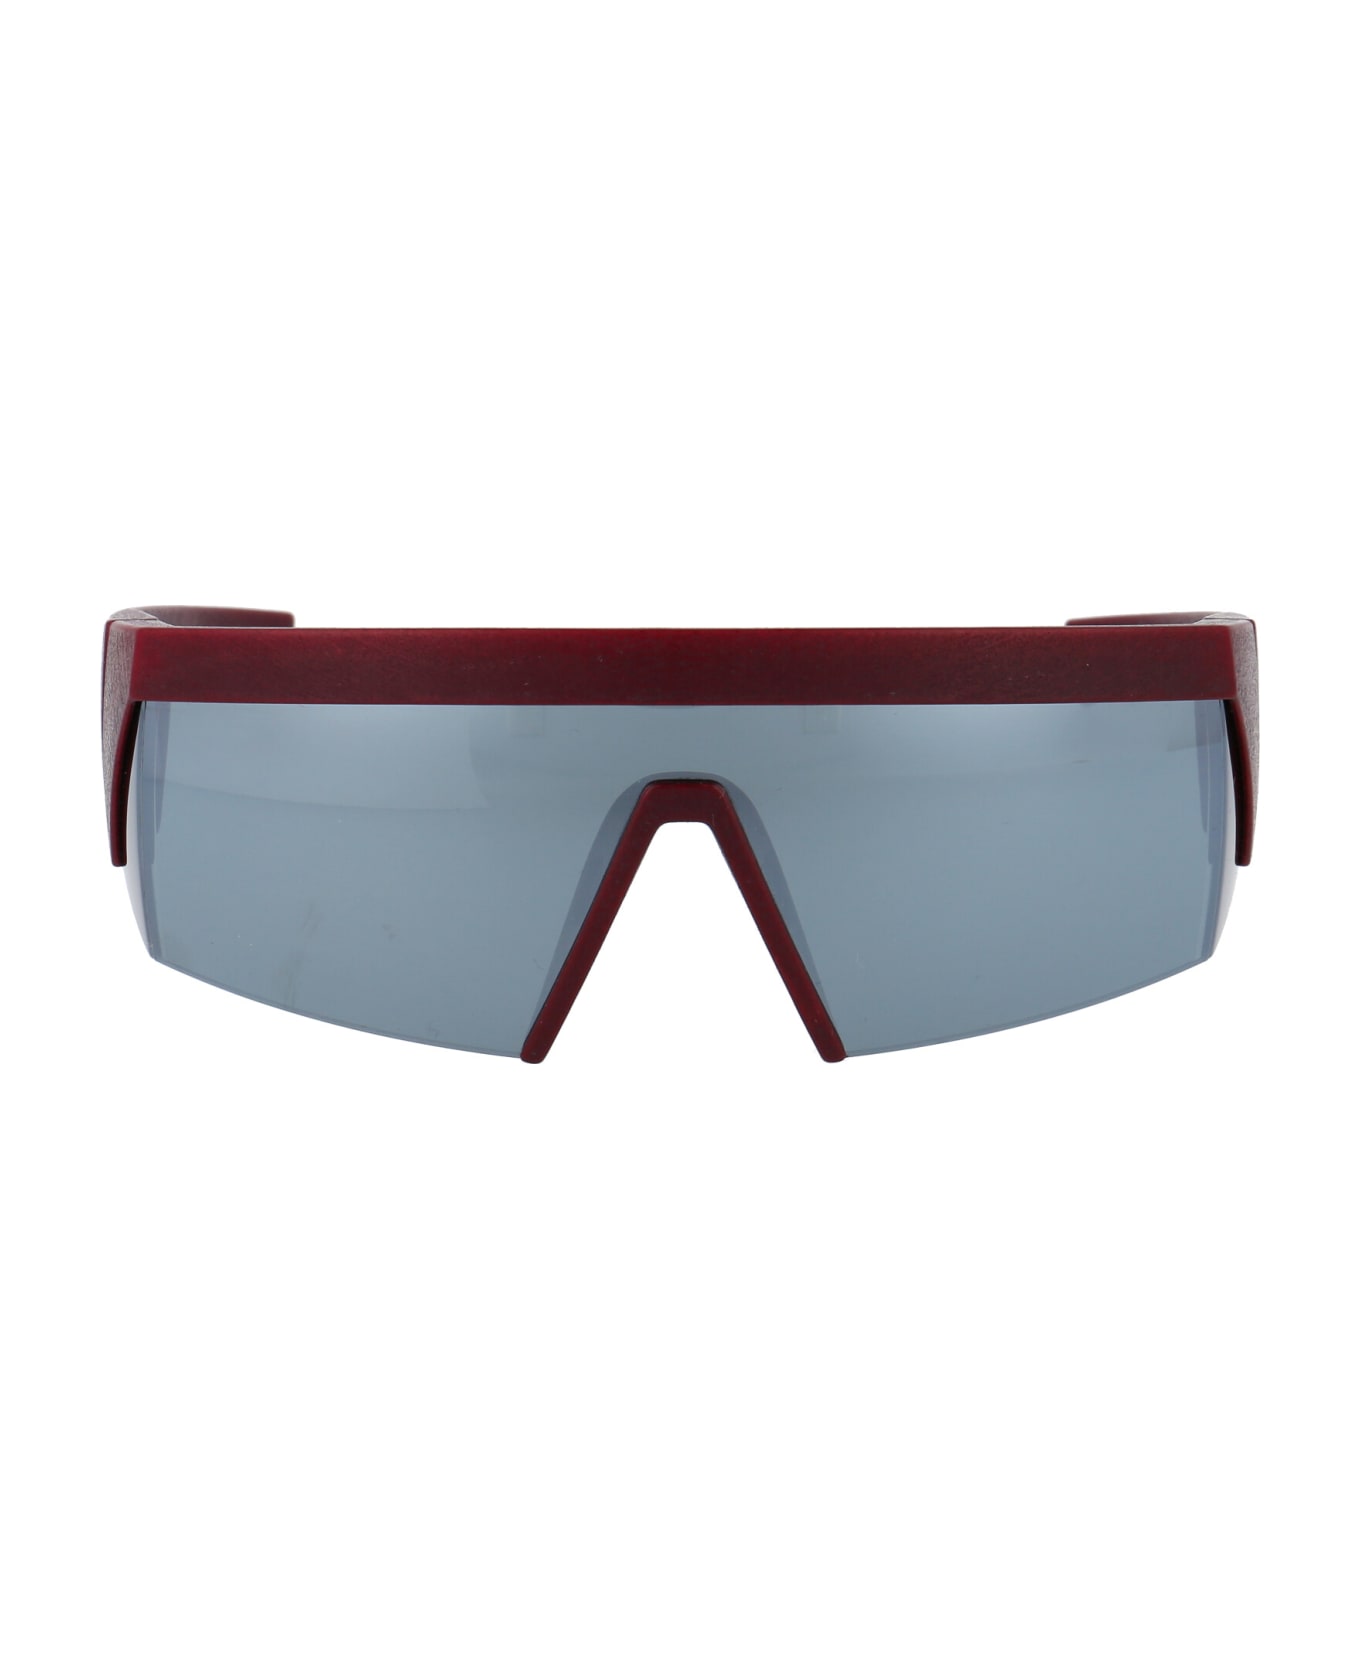 Mykita Vice Sunglasses - 324 MD24 New Aubergine Lateral Silver Flash